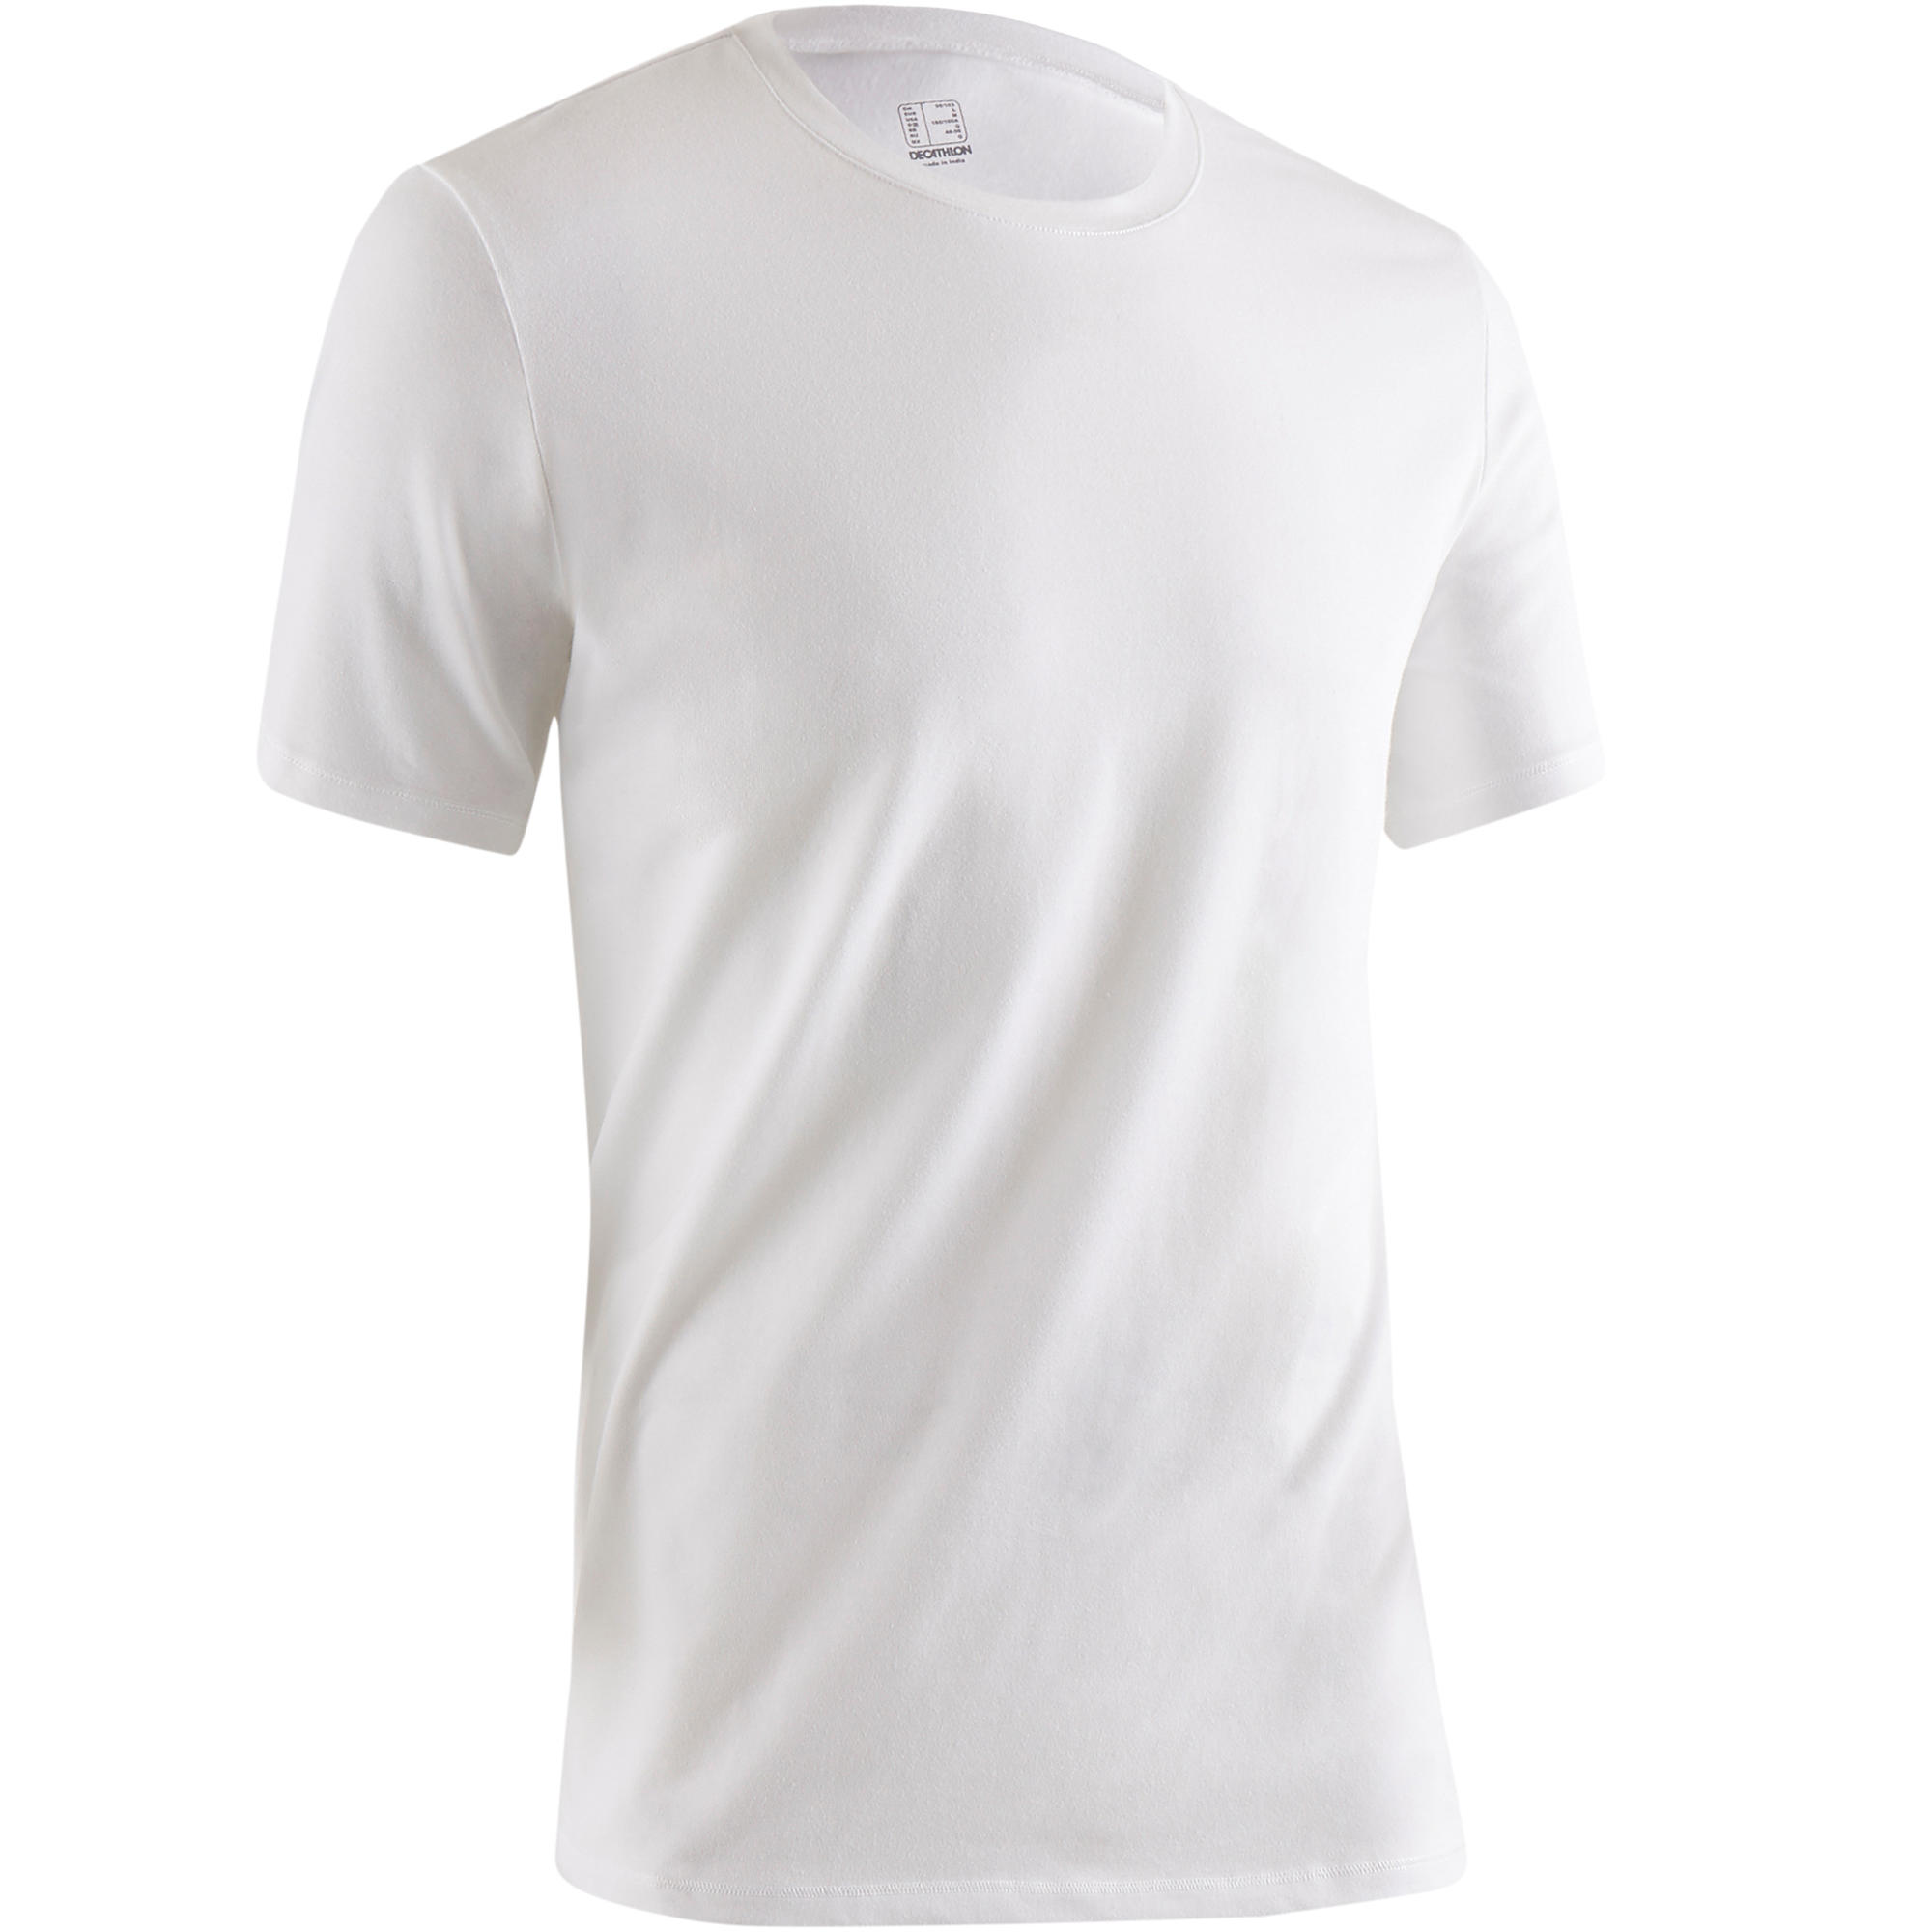 white t shirt decathlon